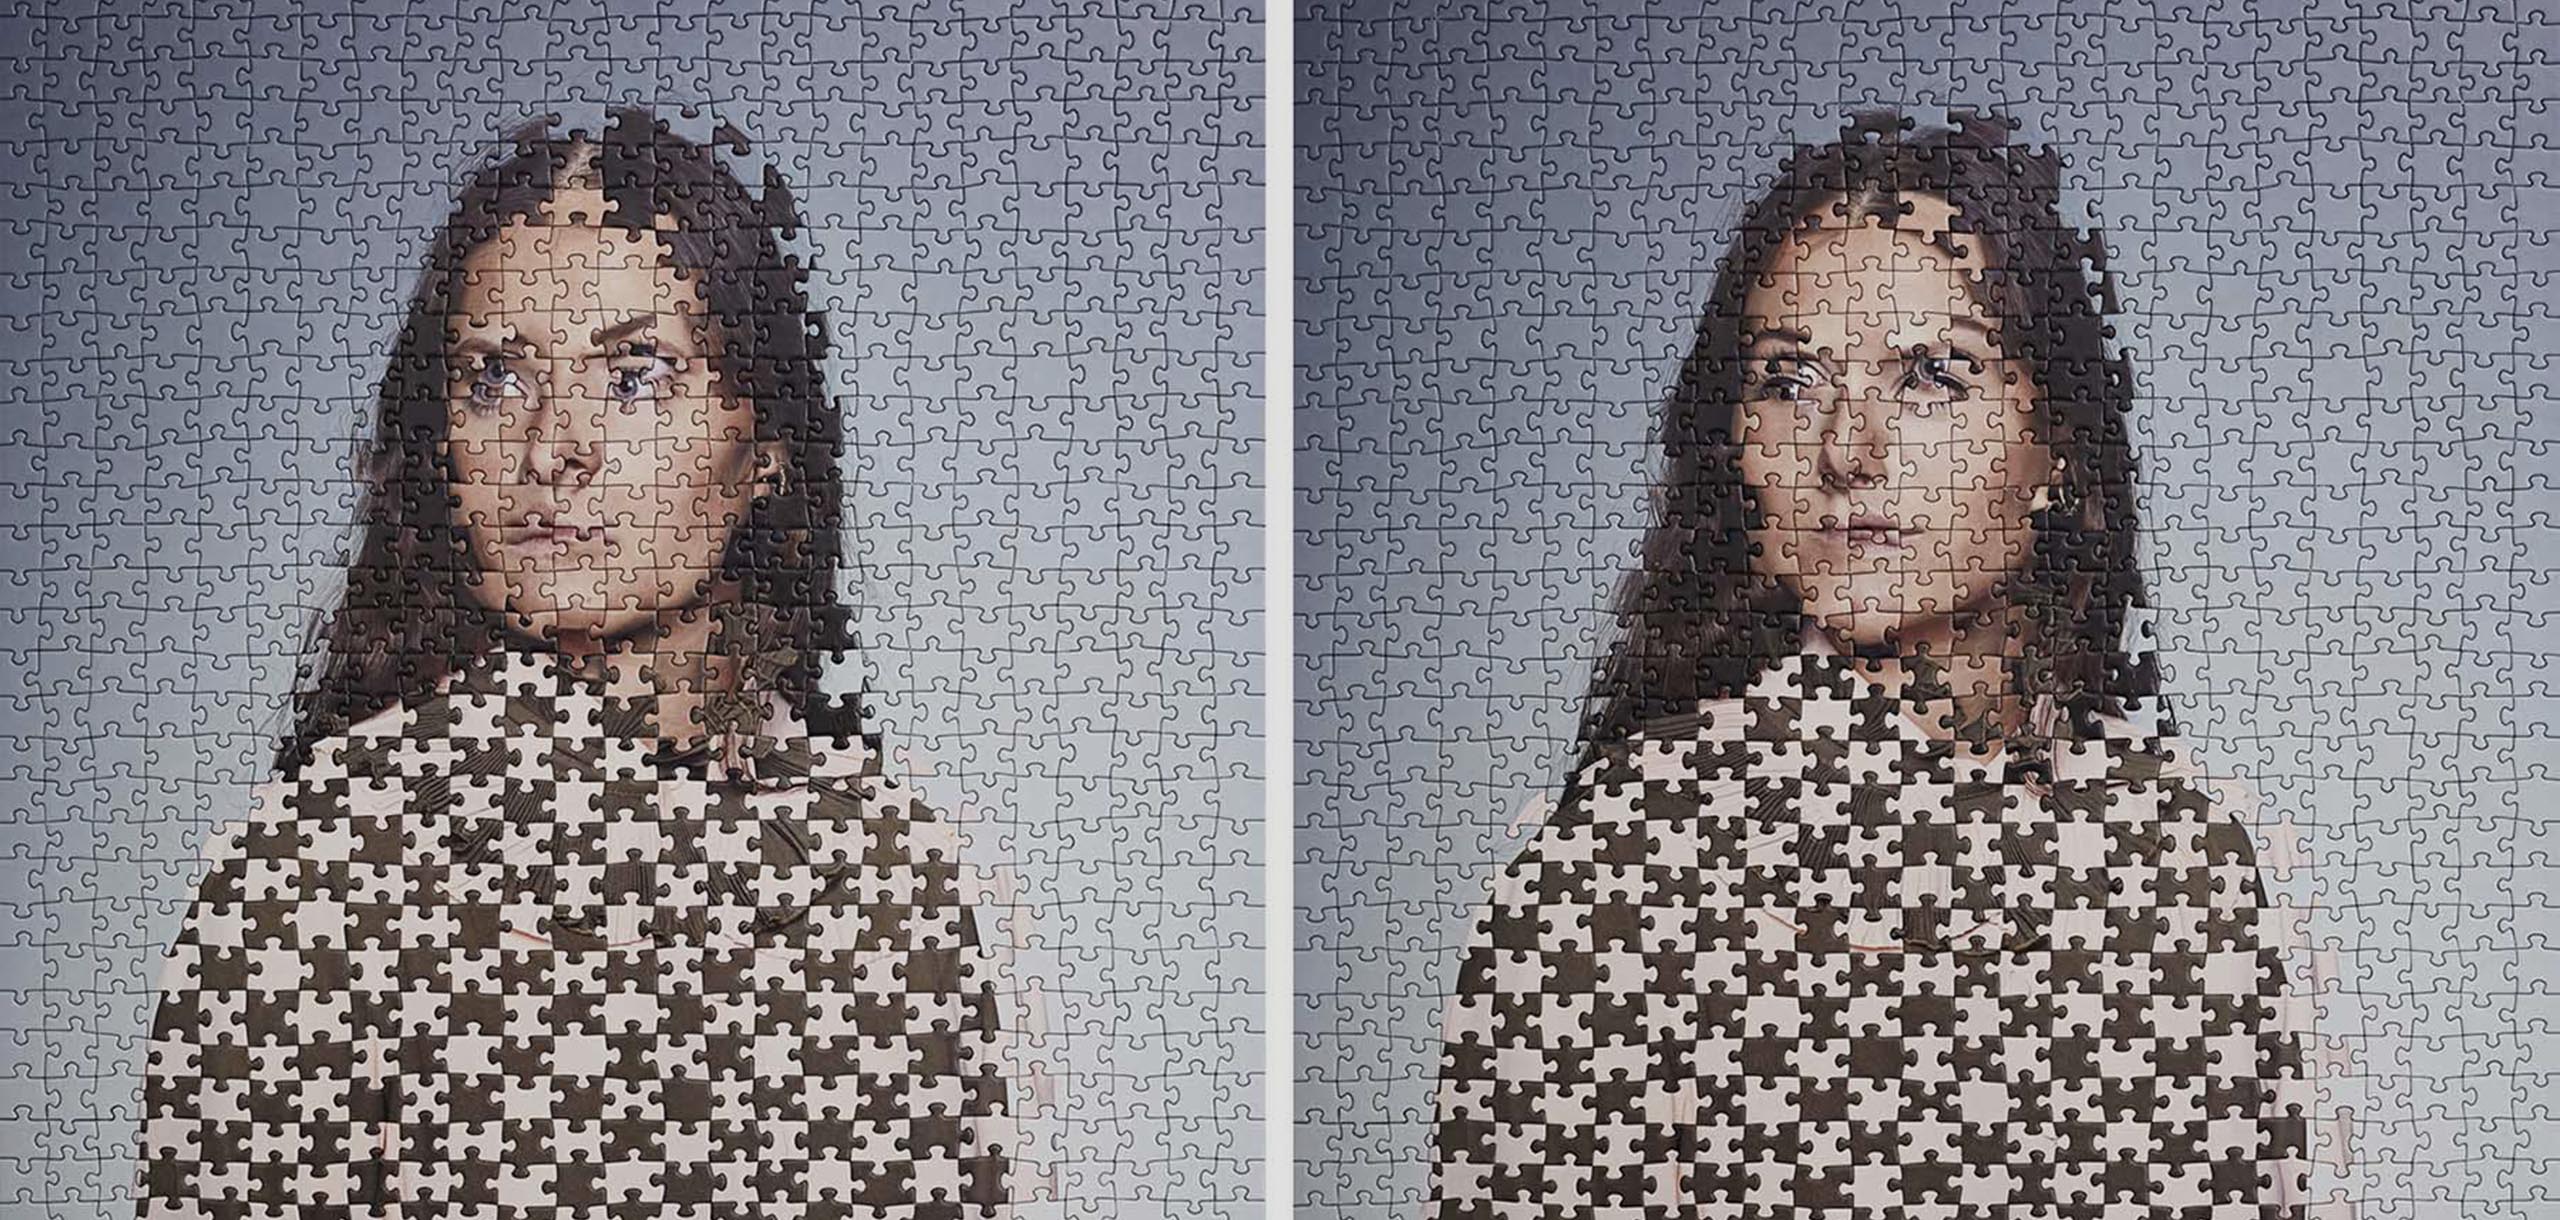 Puzzle twins  Collage portrait, Identity artwork, Identity art